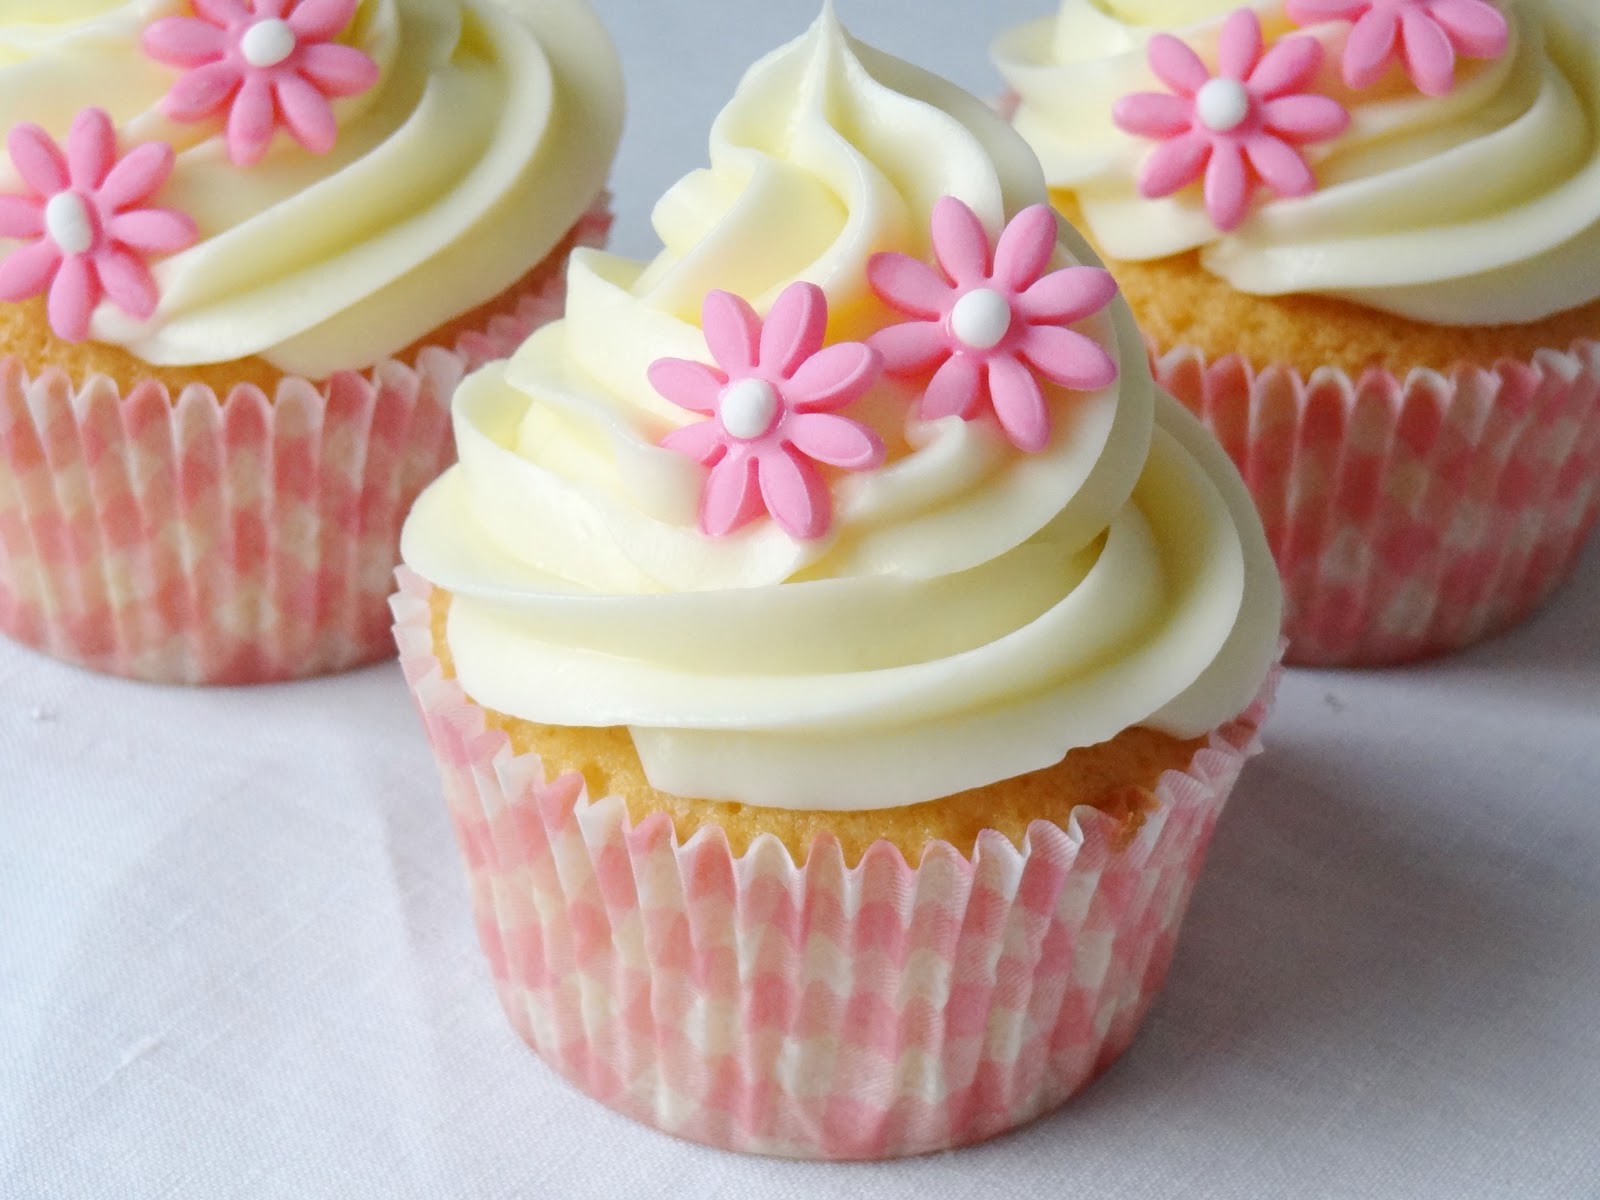 Secretos de Cupcakes: Cupcakes de mantequilla